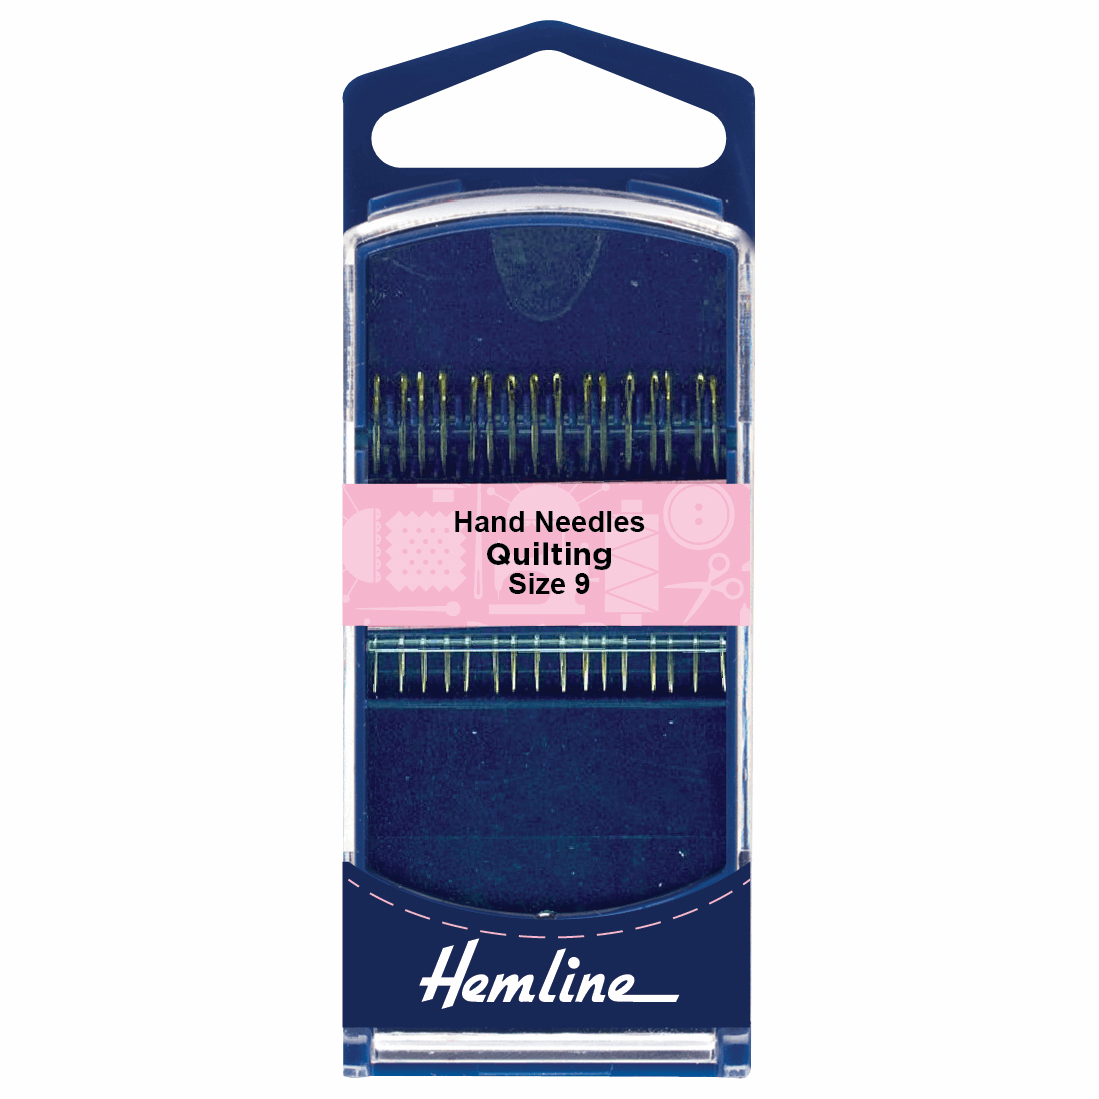 Hemline Premium Hand Quilting Needles - Size 9 (Pack of 16)